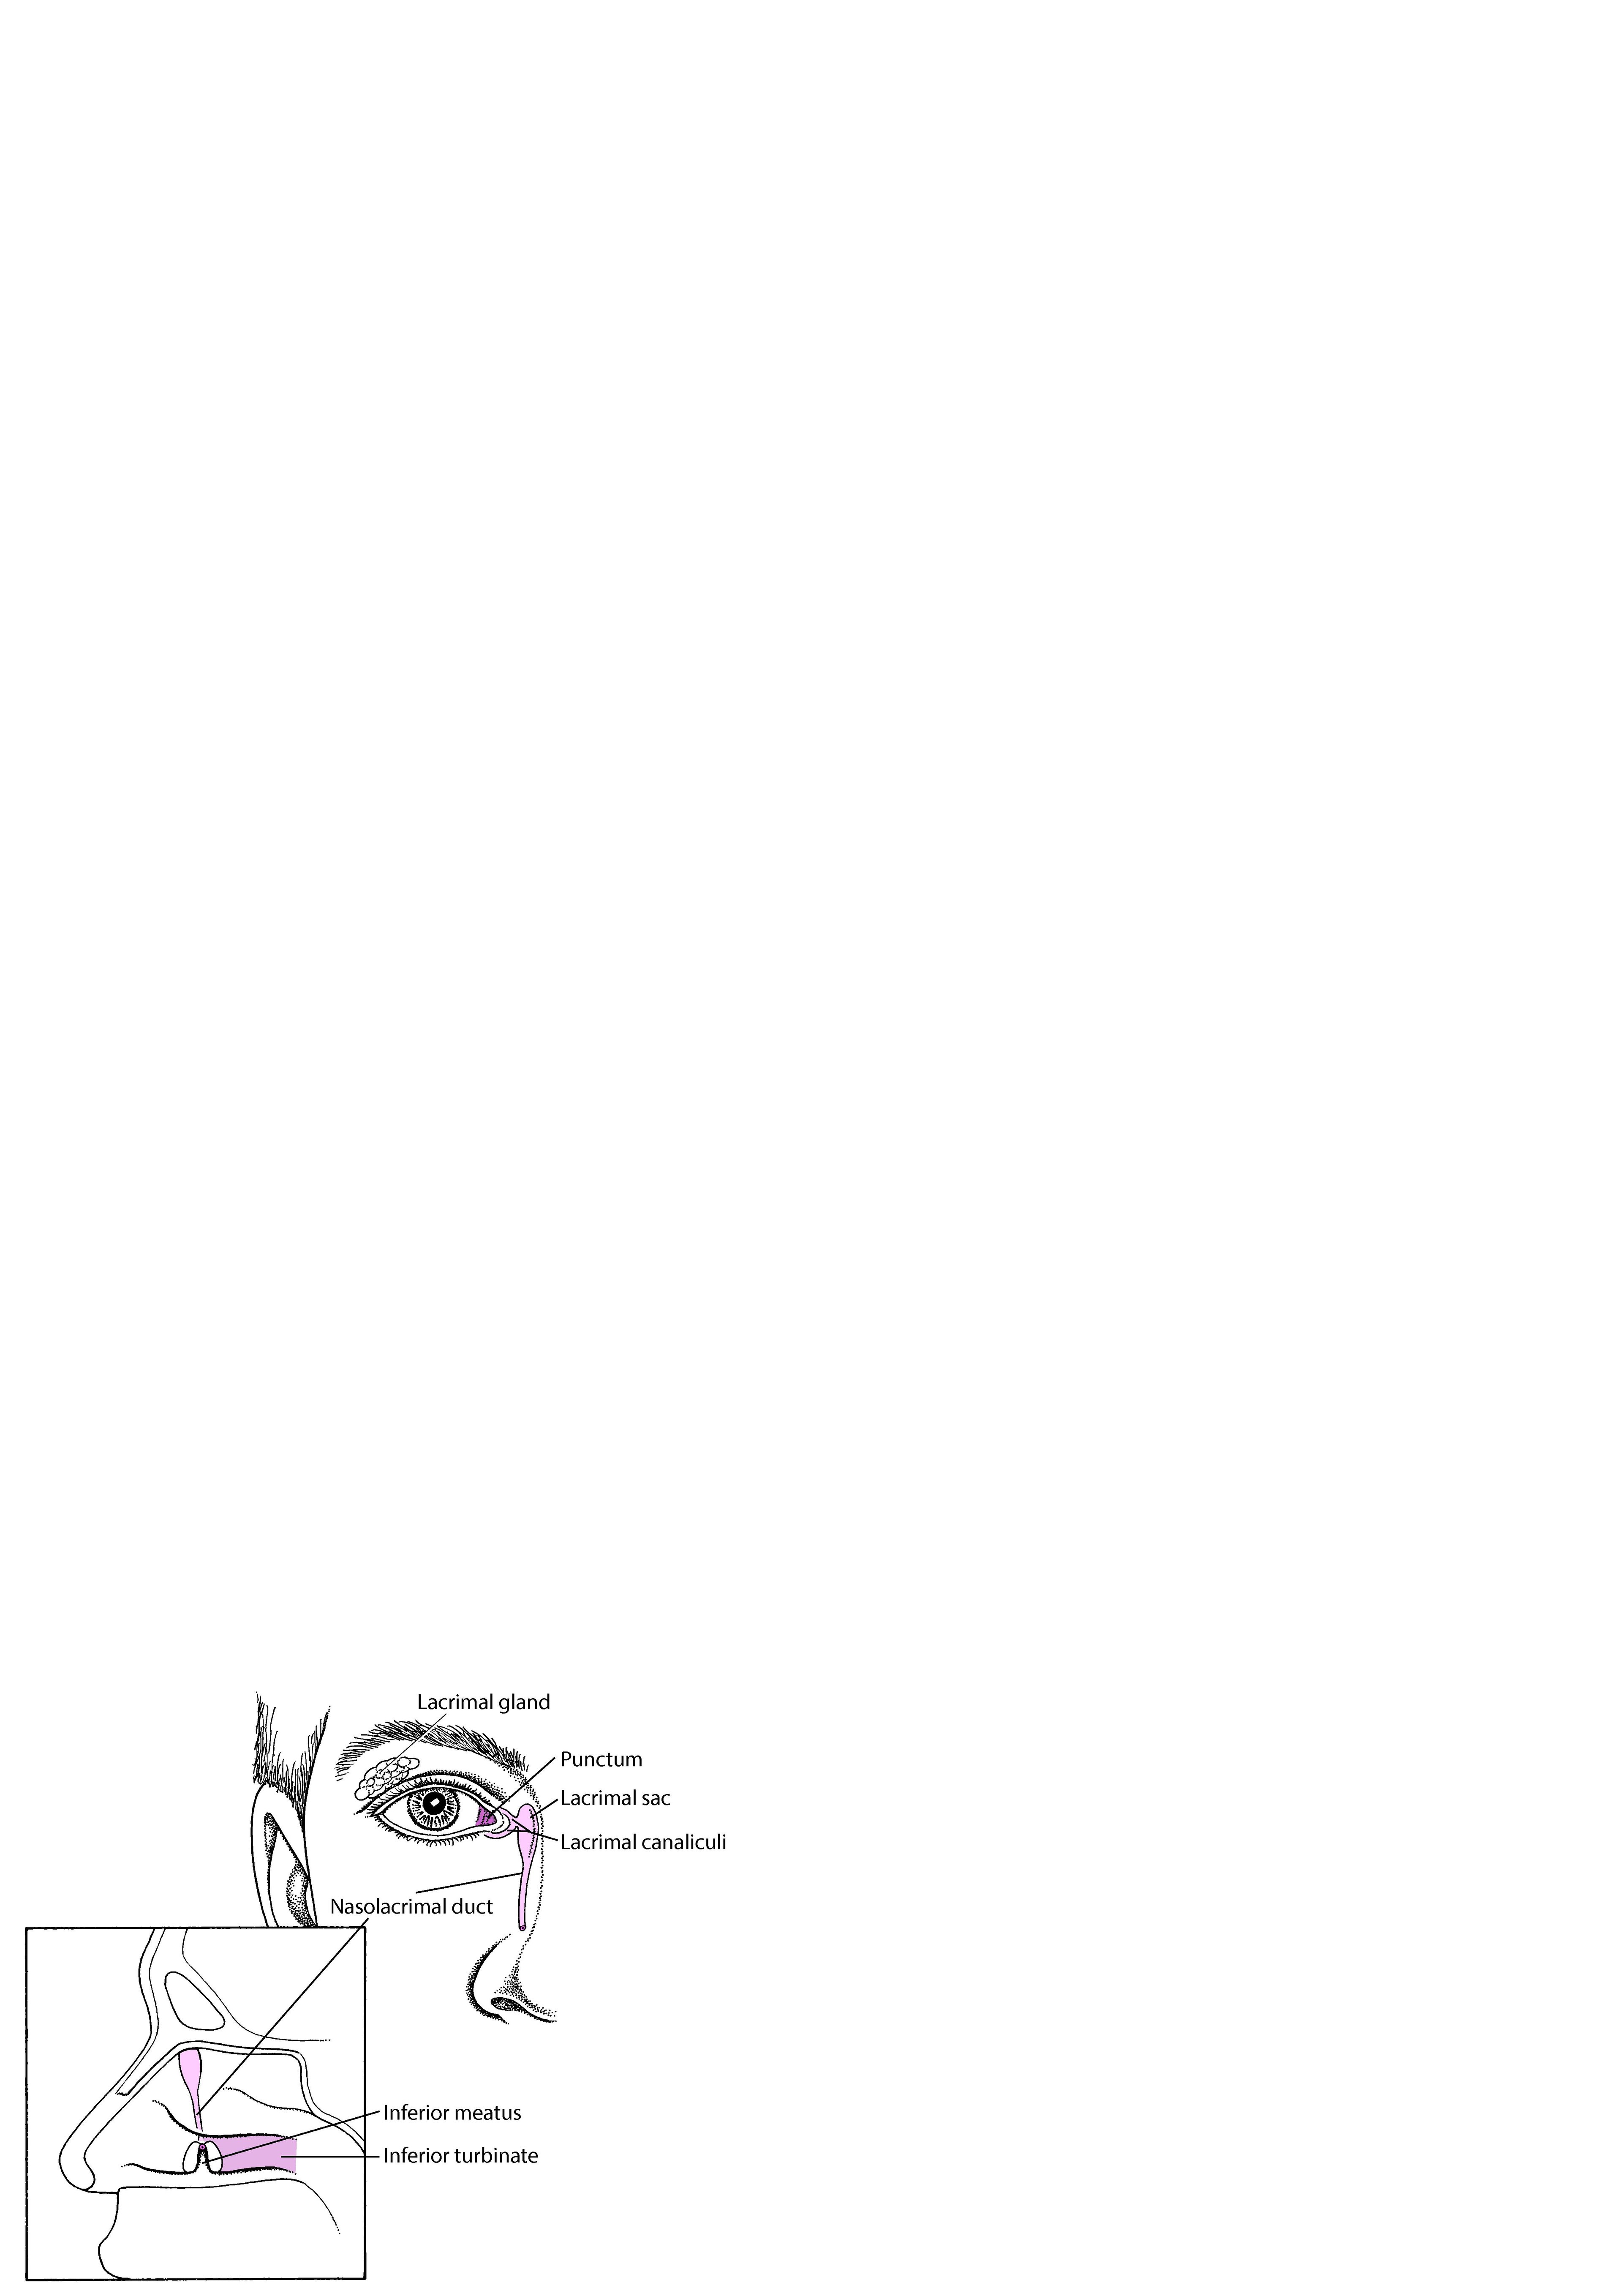 Anatomia do sistema lacrimal